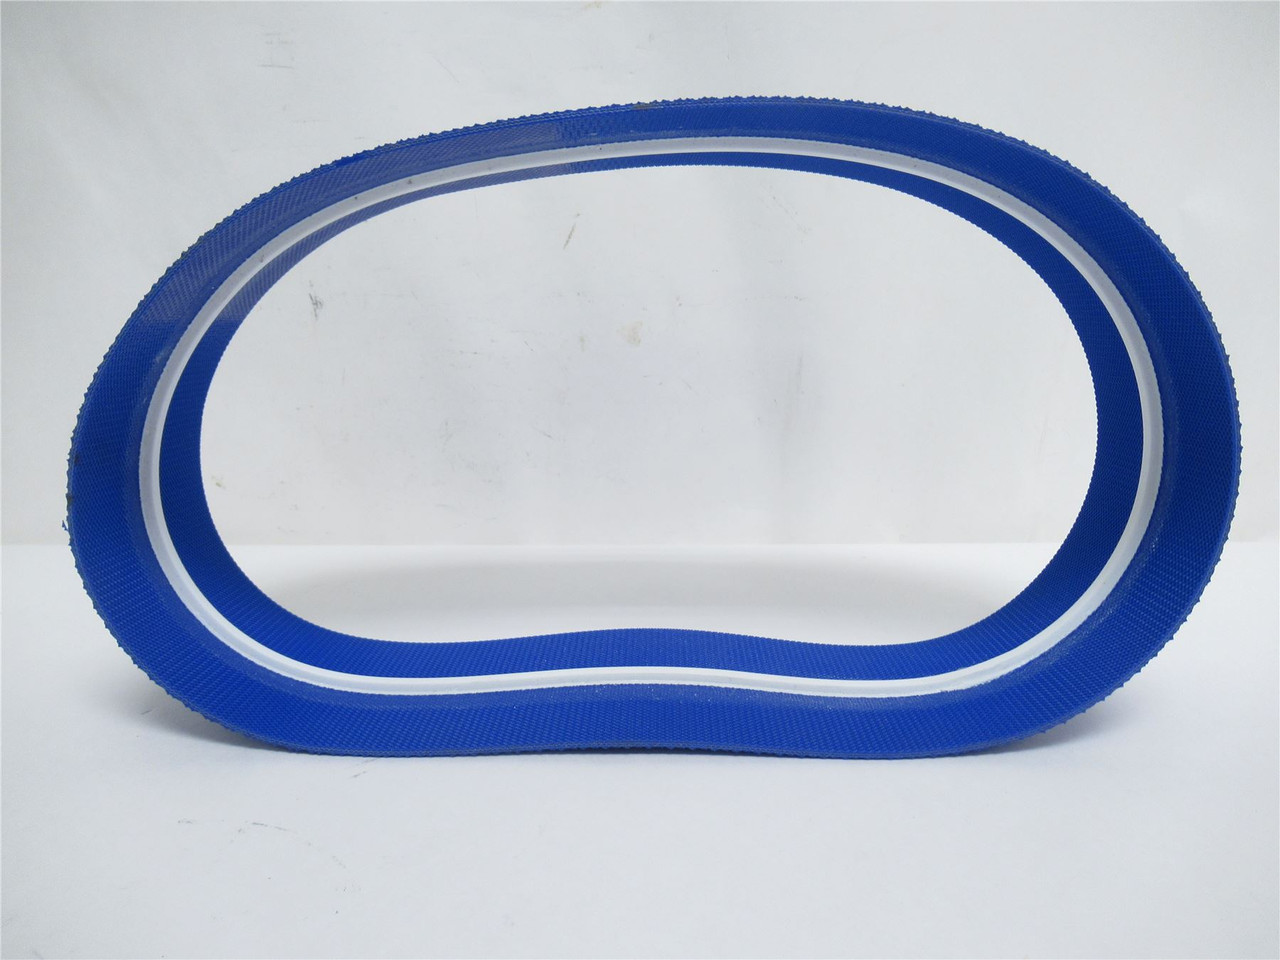 Marel 1953498; Blue belt; 2' Long x 74mm Wide